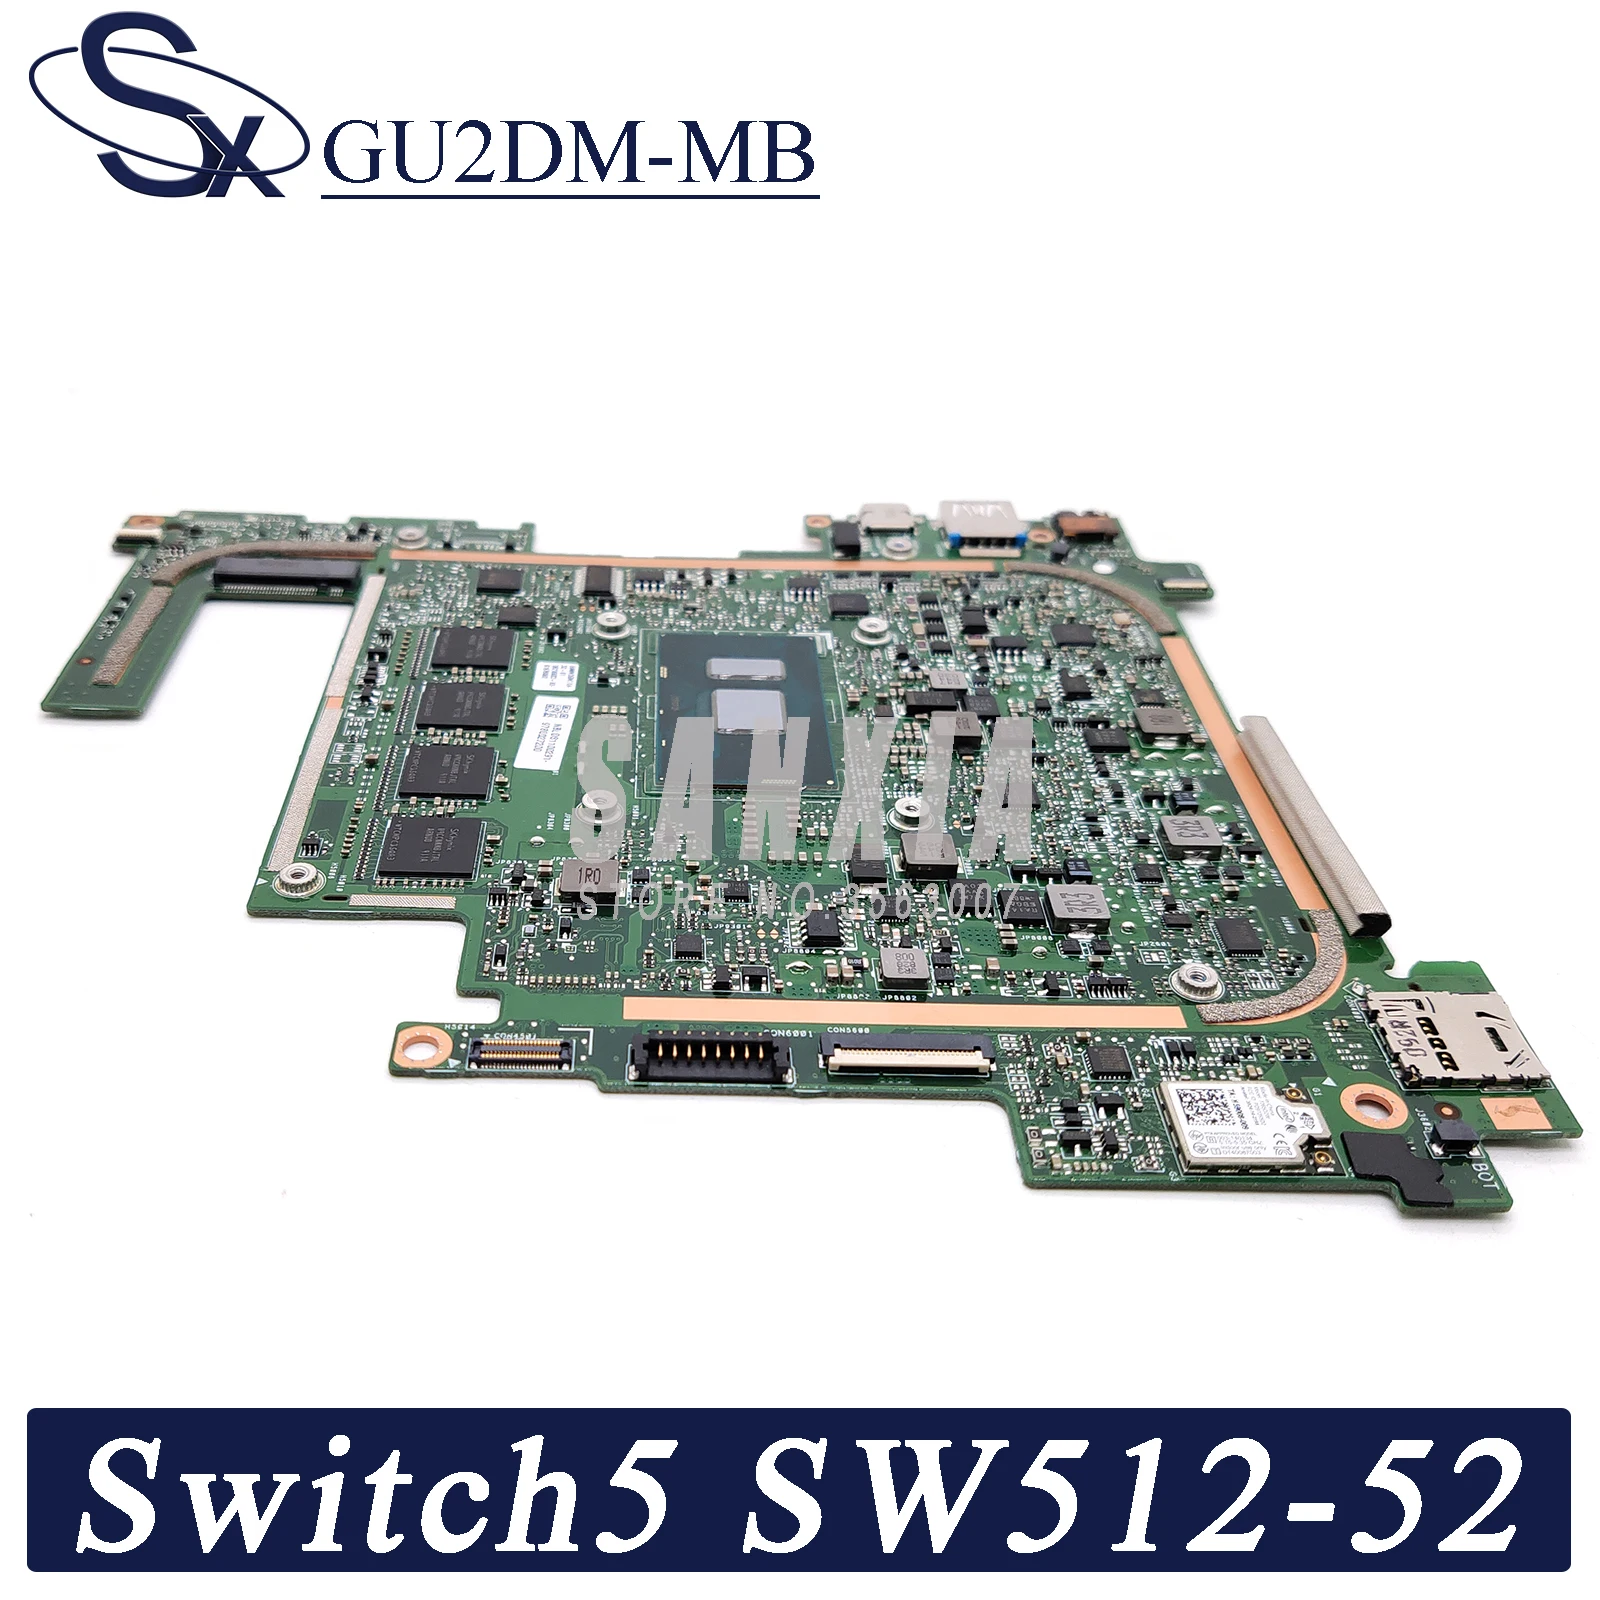 kefu gu2dm mb laptop motherboard for acer switch5 sw512 52 original mainboard 8gb ram i7 7500u free global shipping